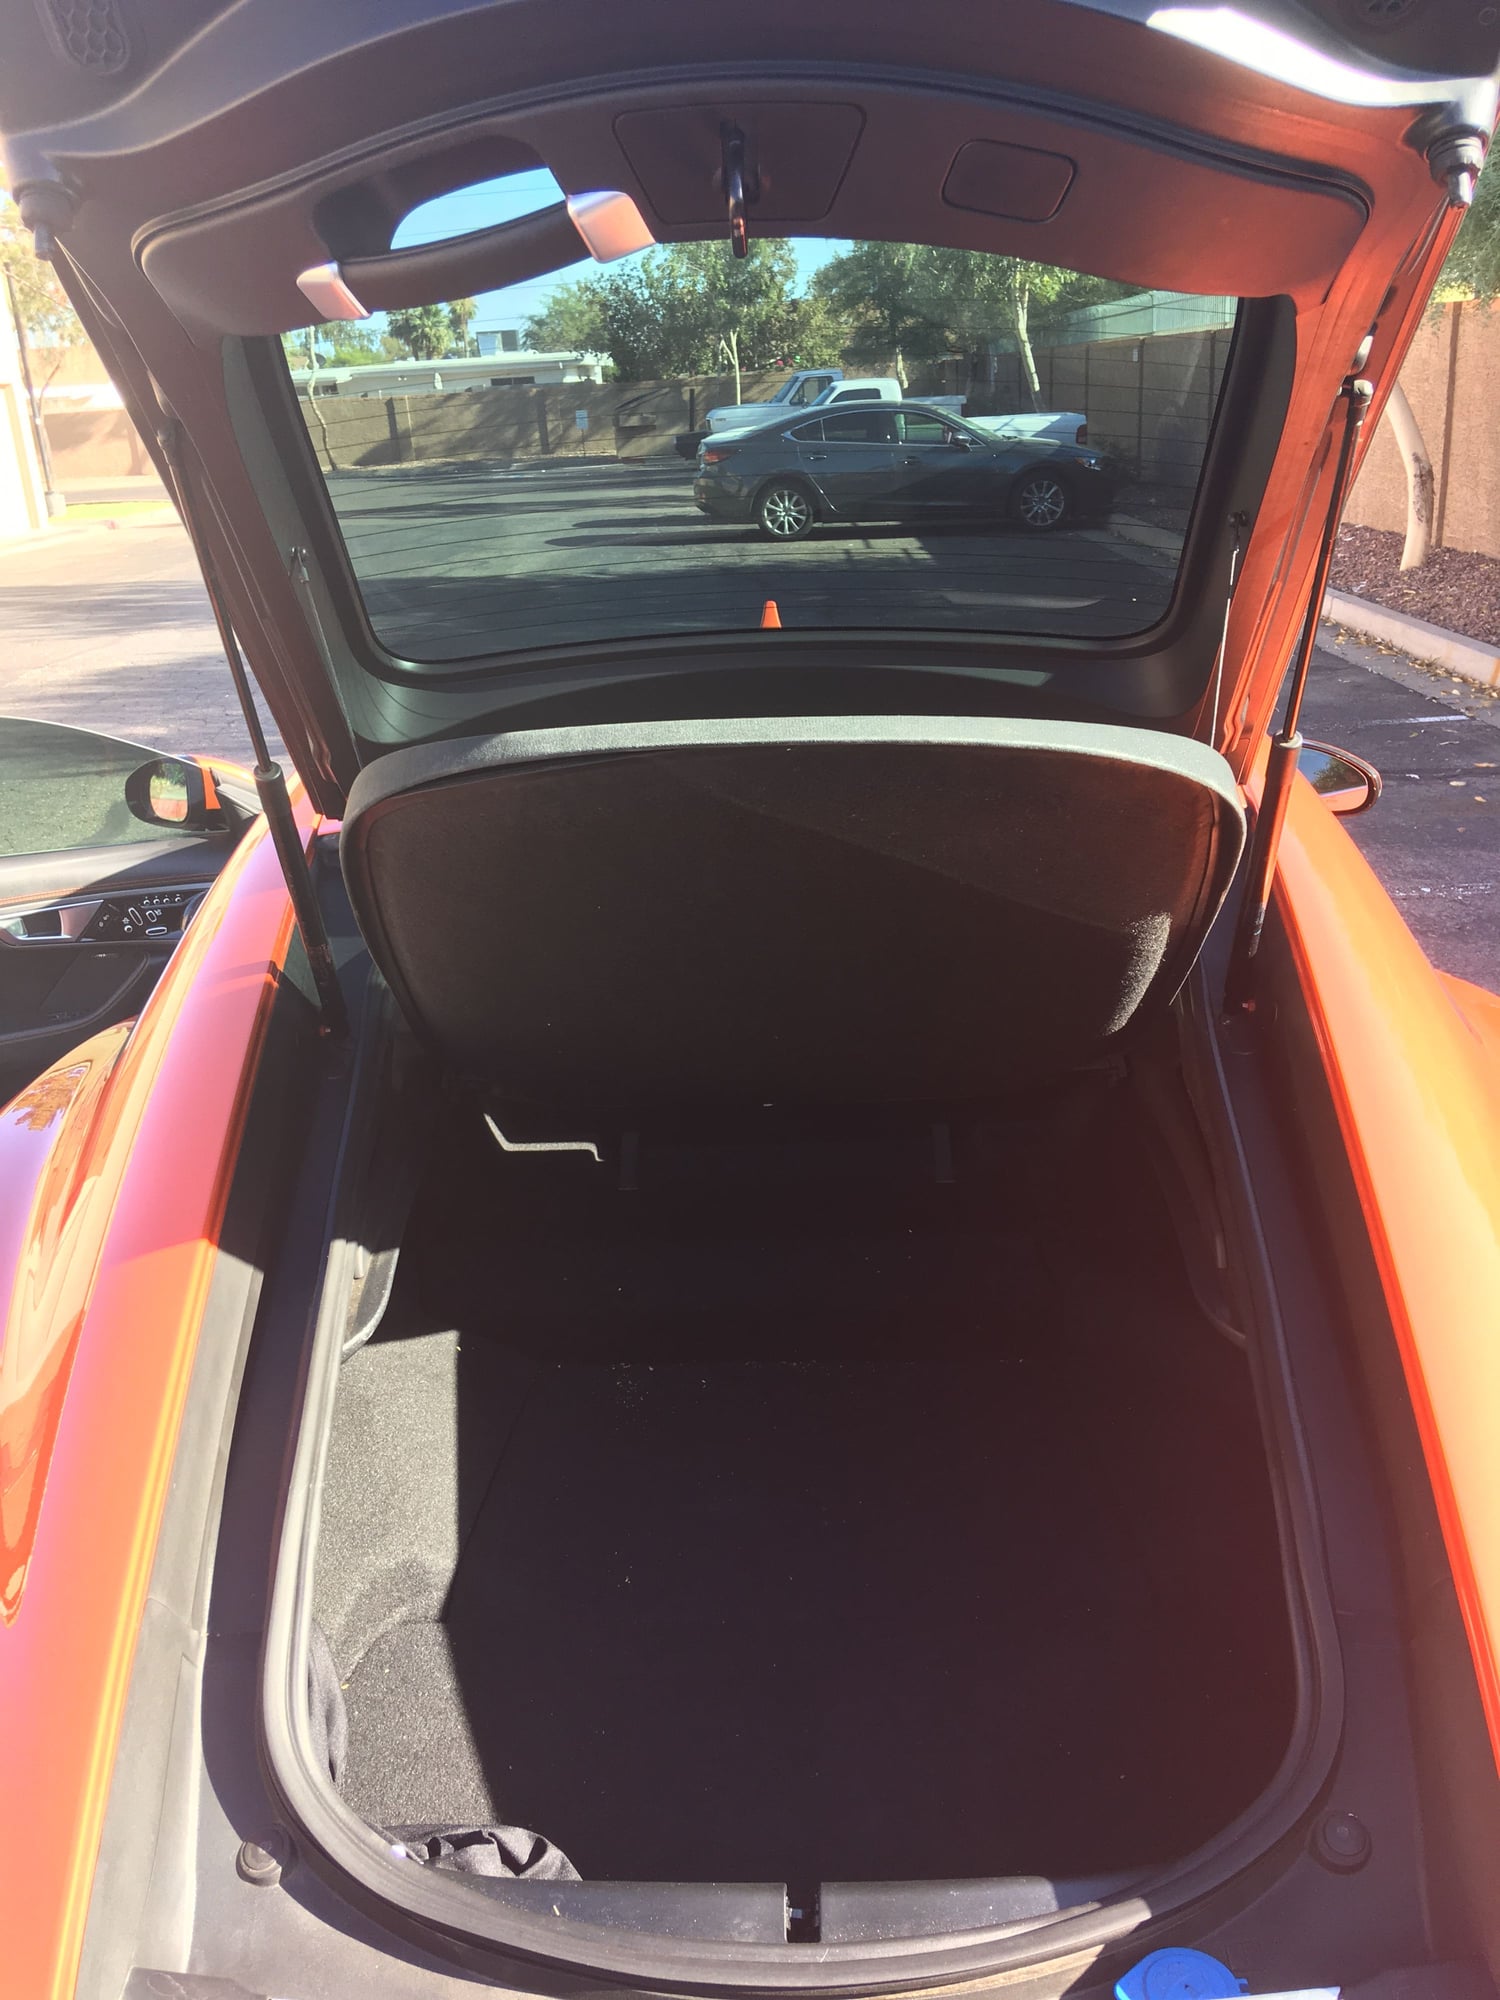 2015 Jaguar F-Type - RWD Orange F-Type 550HP only $45K - Used - VIN SAJWA6DA2FMK11670 - 23,107 Miles - 8 cyl - 2WD - Automatic - Coupe - Orange - Phoenix, AZ 85282, United States